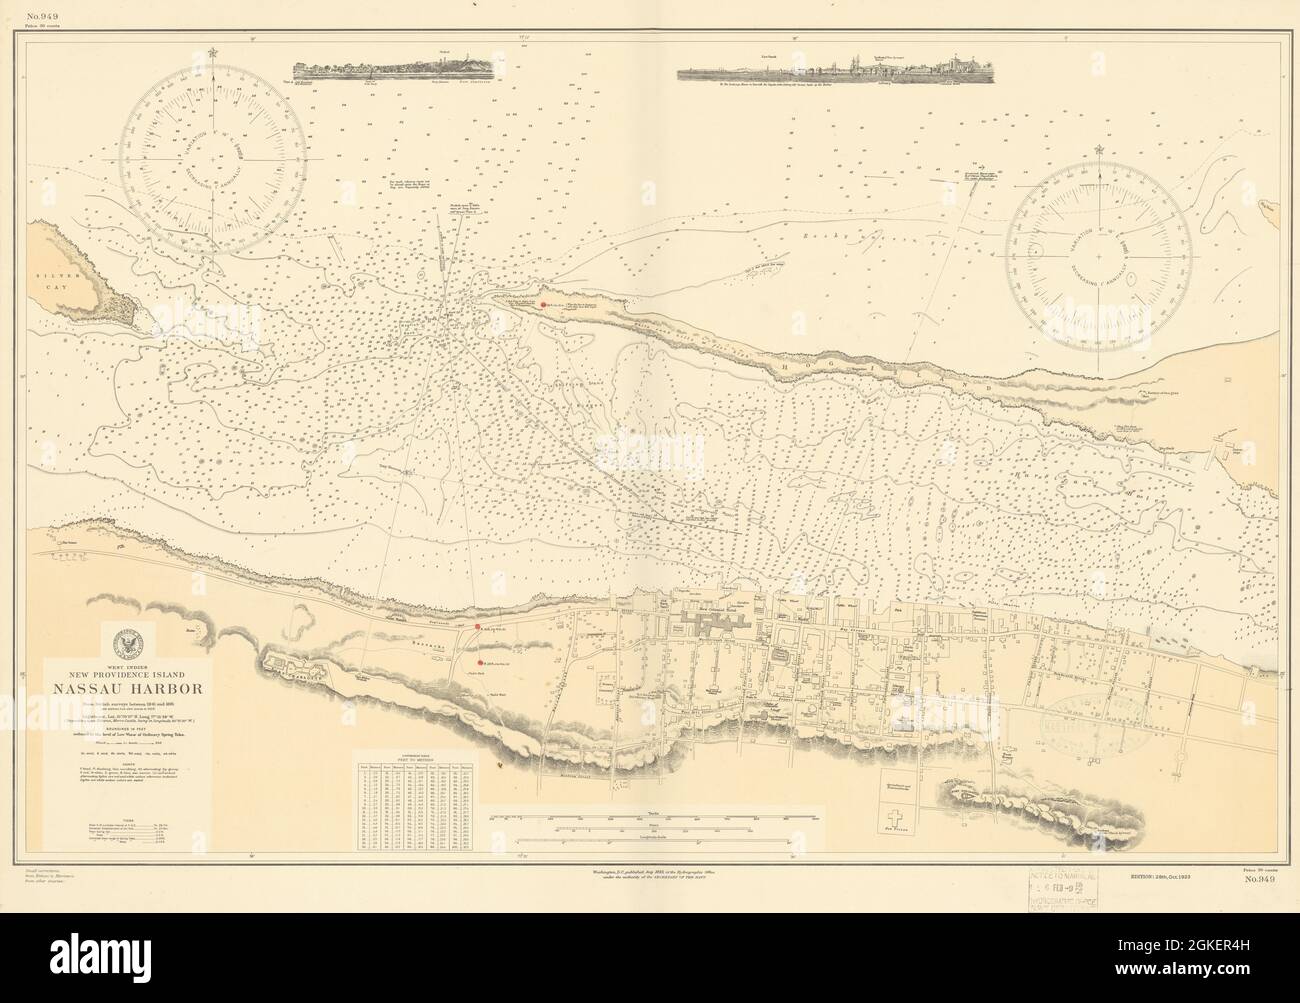 Nassau Harbour New Providence Bahamas US Navy chart town plan 1885 (1924) map Stock Photo